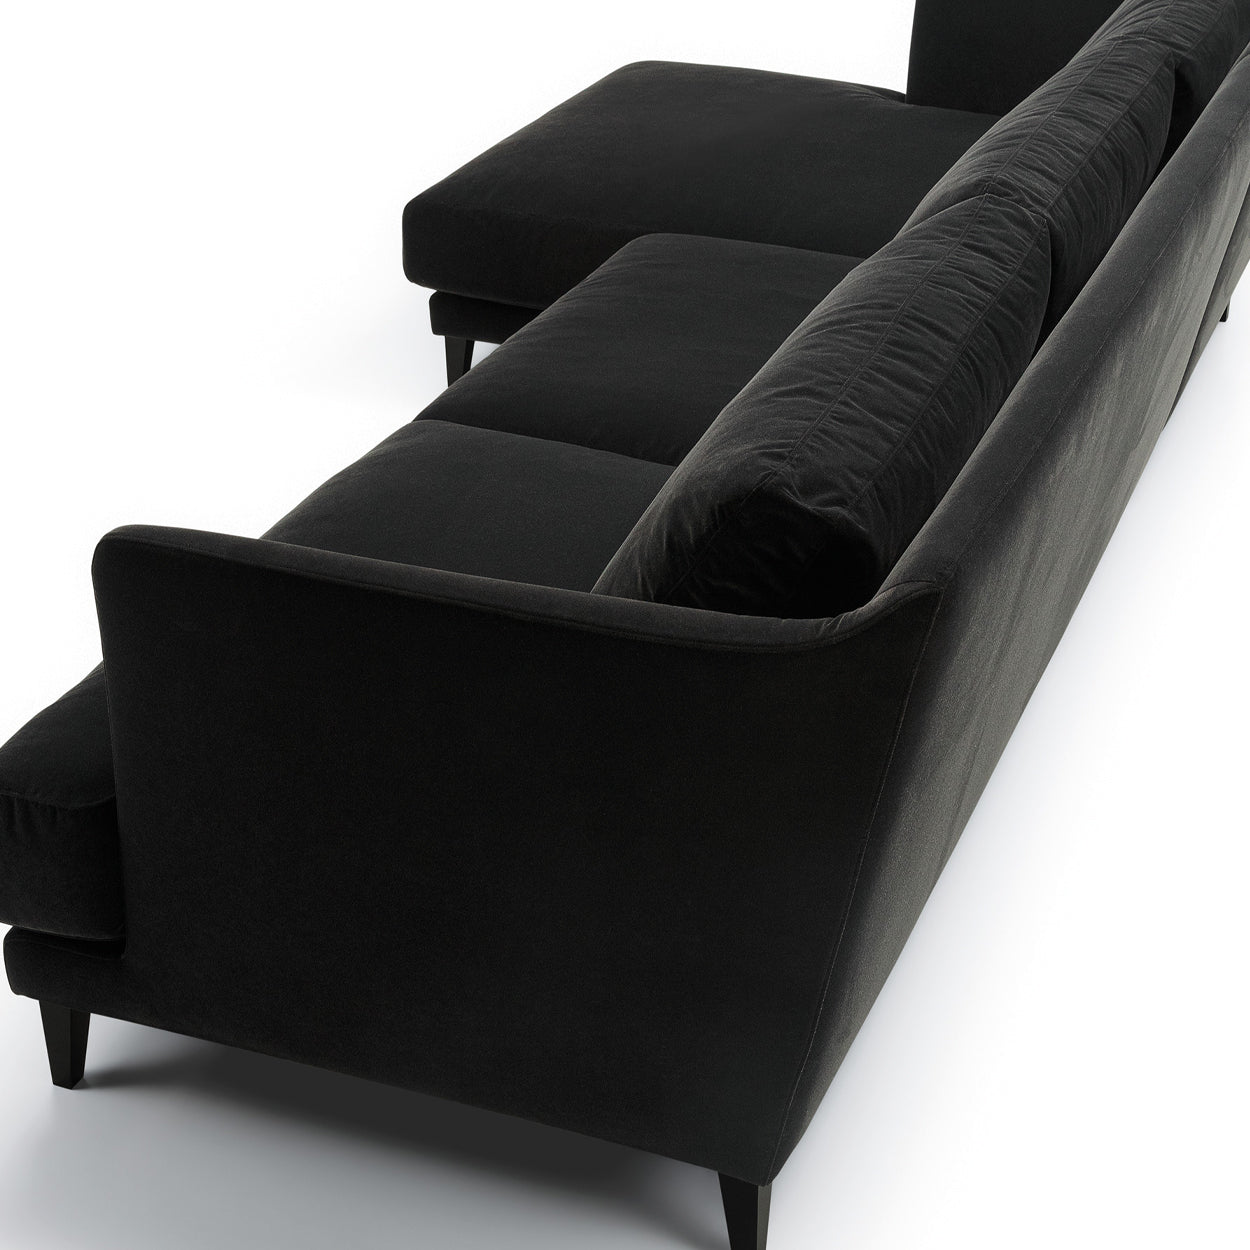 Wren Sofa - Standard - Large Chaise